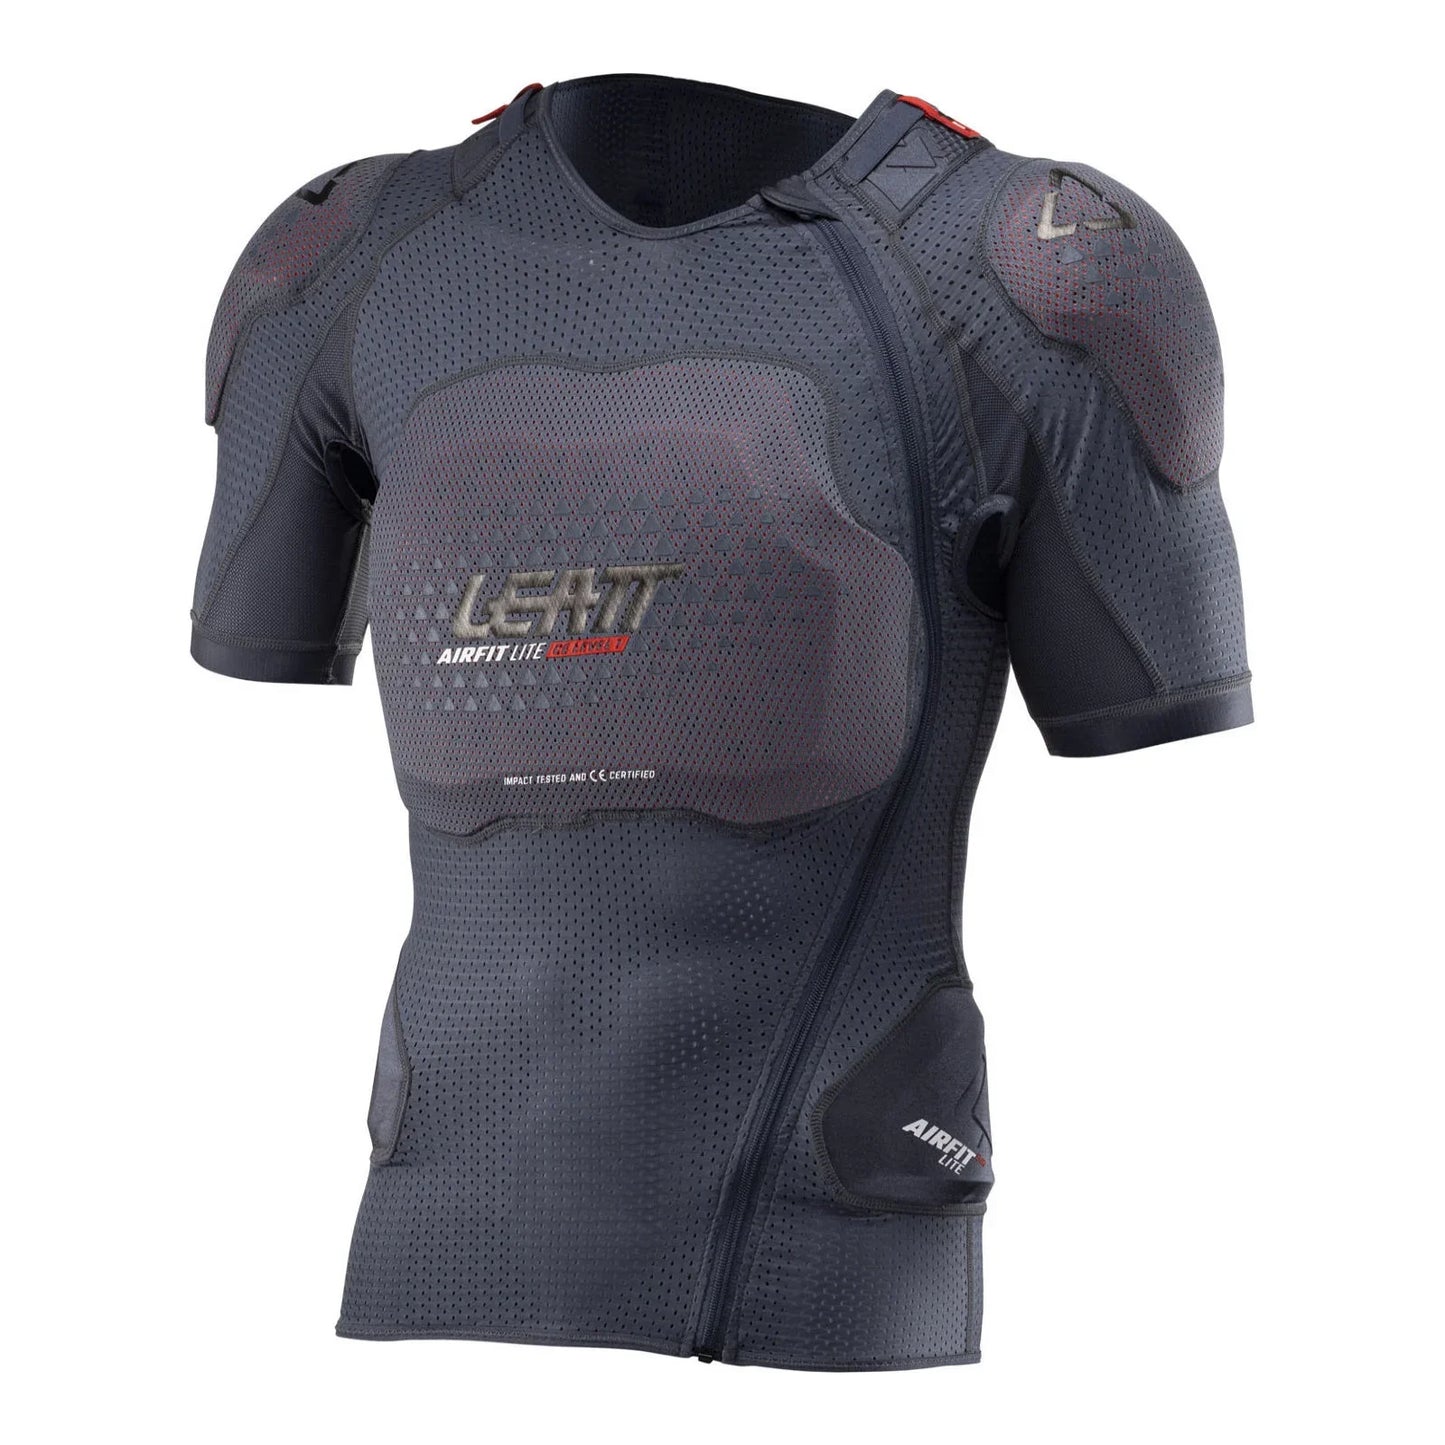 Leatt Body Tee 3DF Airfit Lite Evo shirt